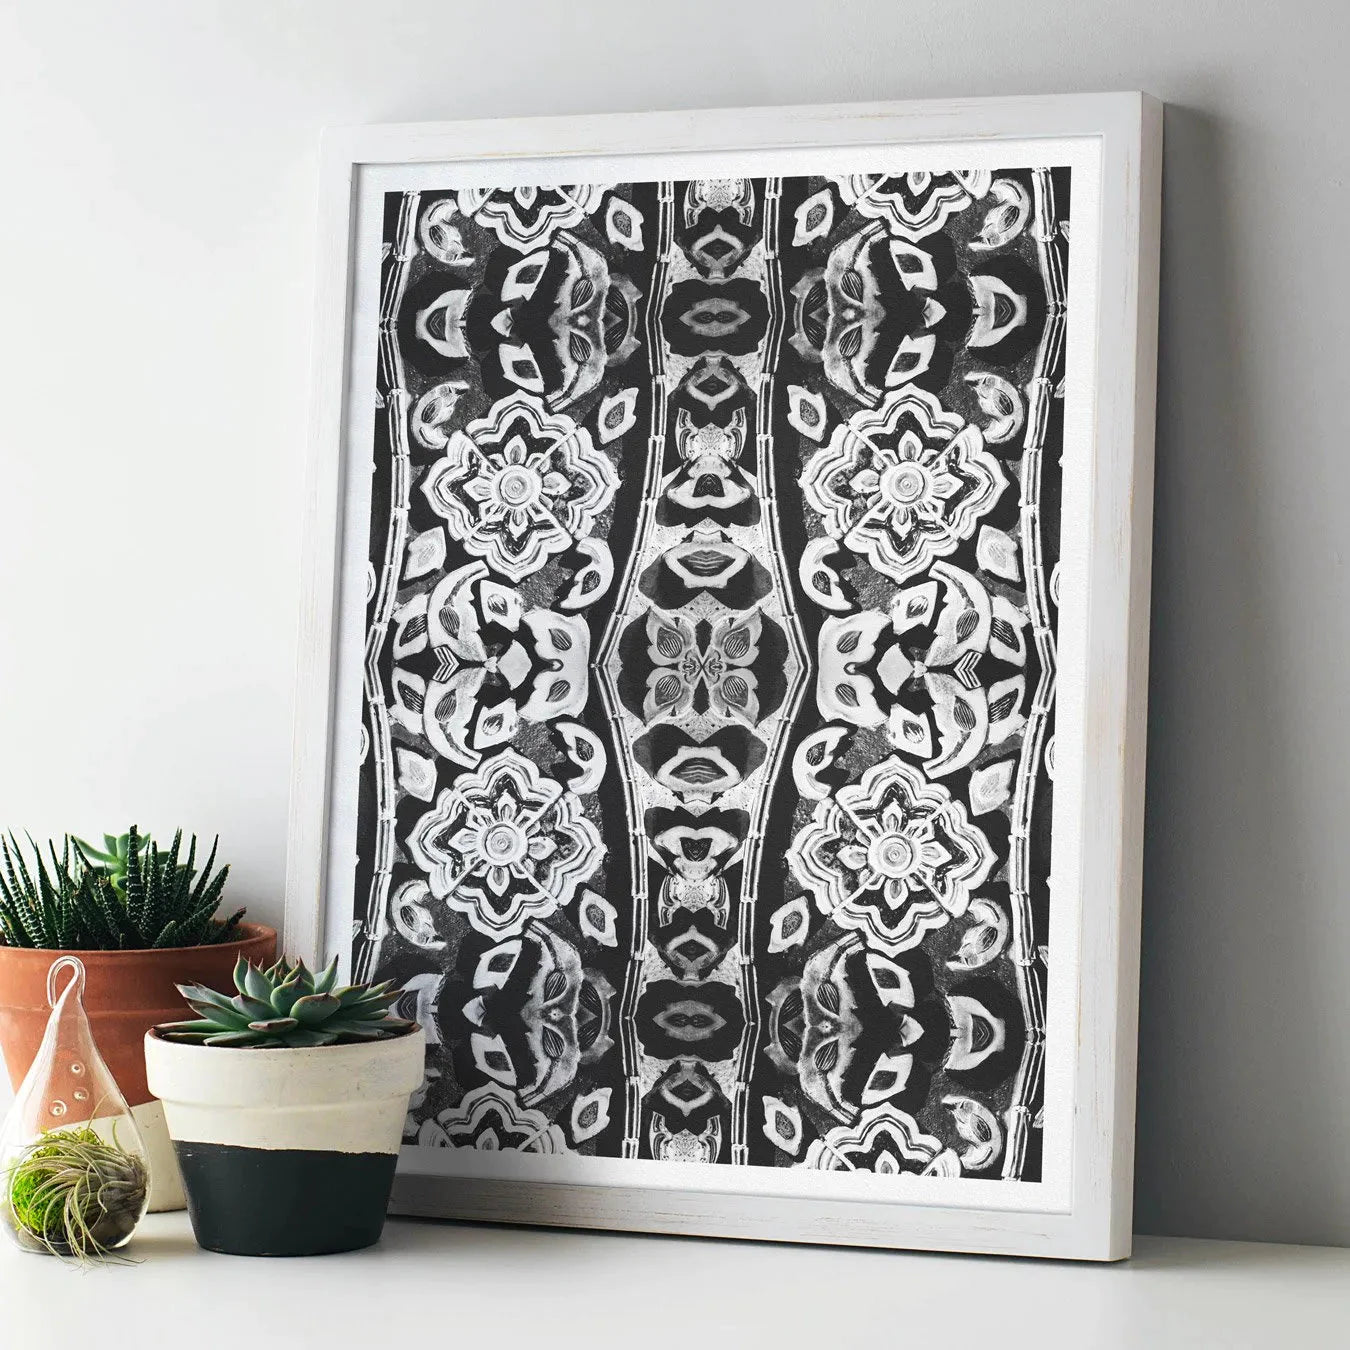 Masala Thai² Giclée Print - Black And White Wall Art - 12×16 - Posters Prints & Visual Artwork - Aesthetic Art